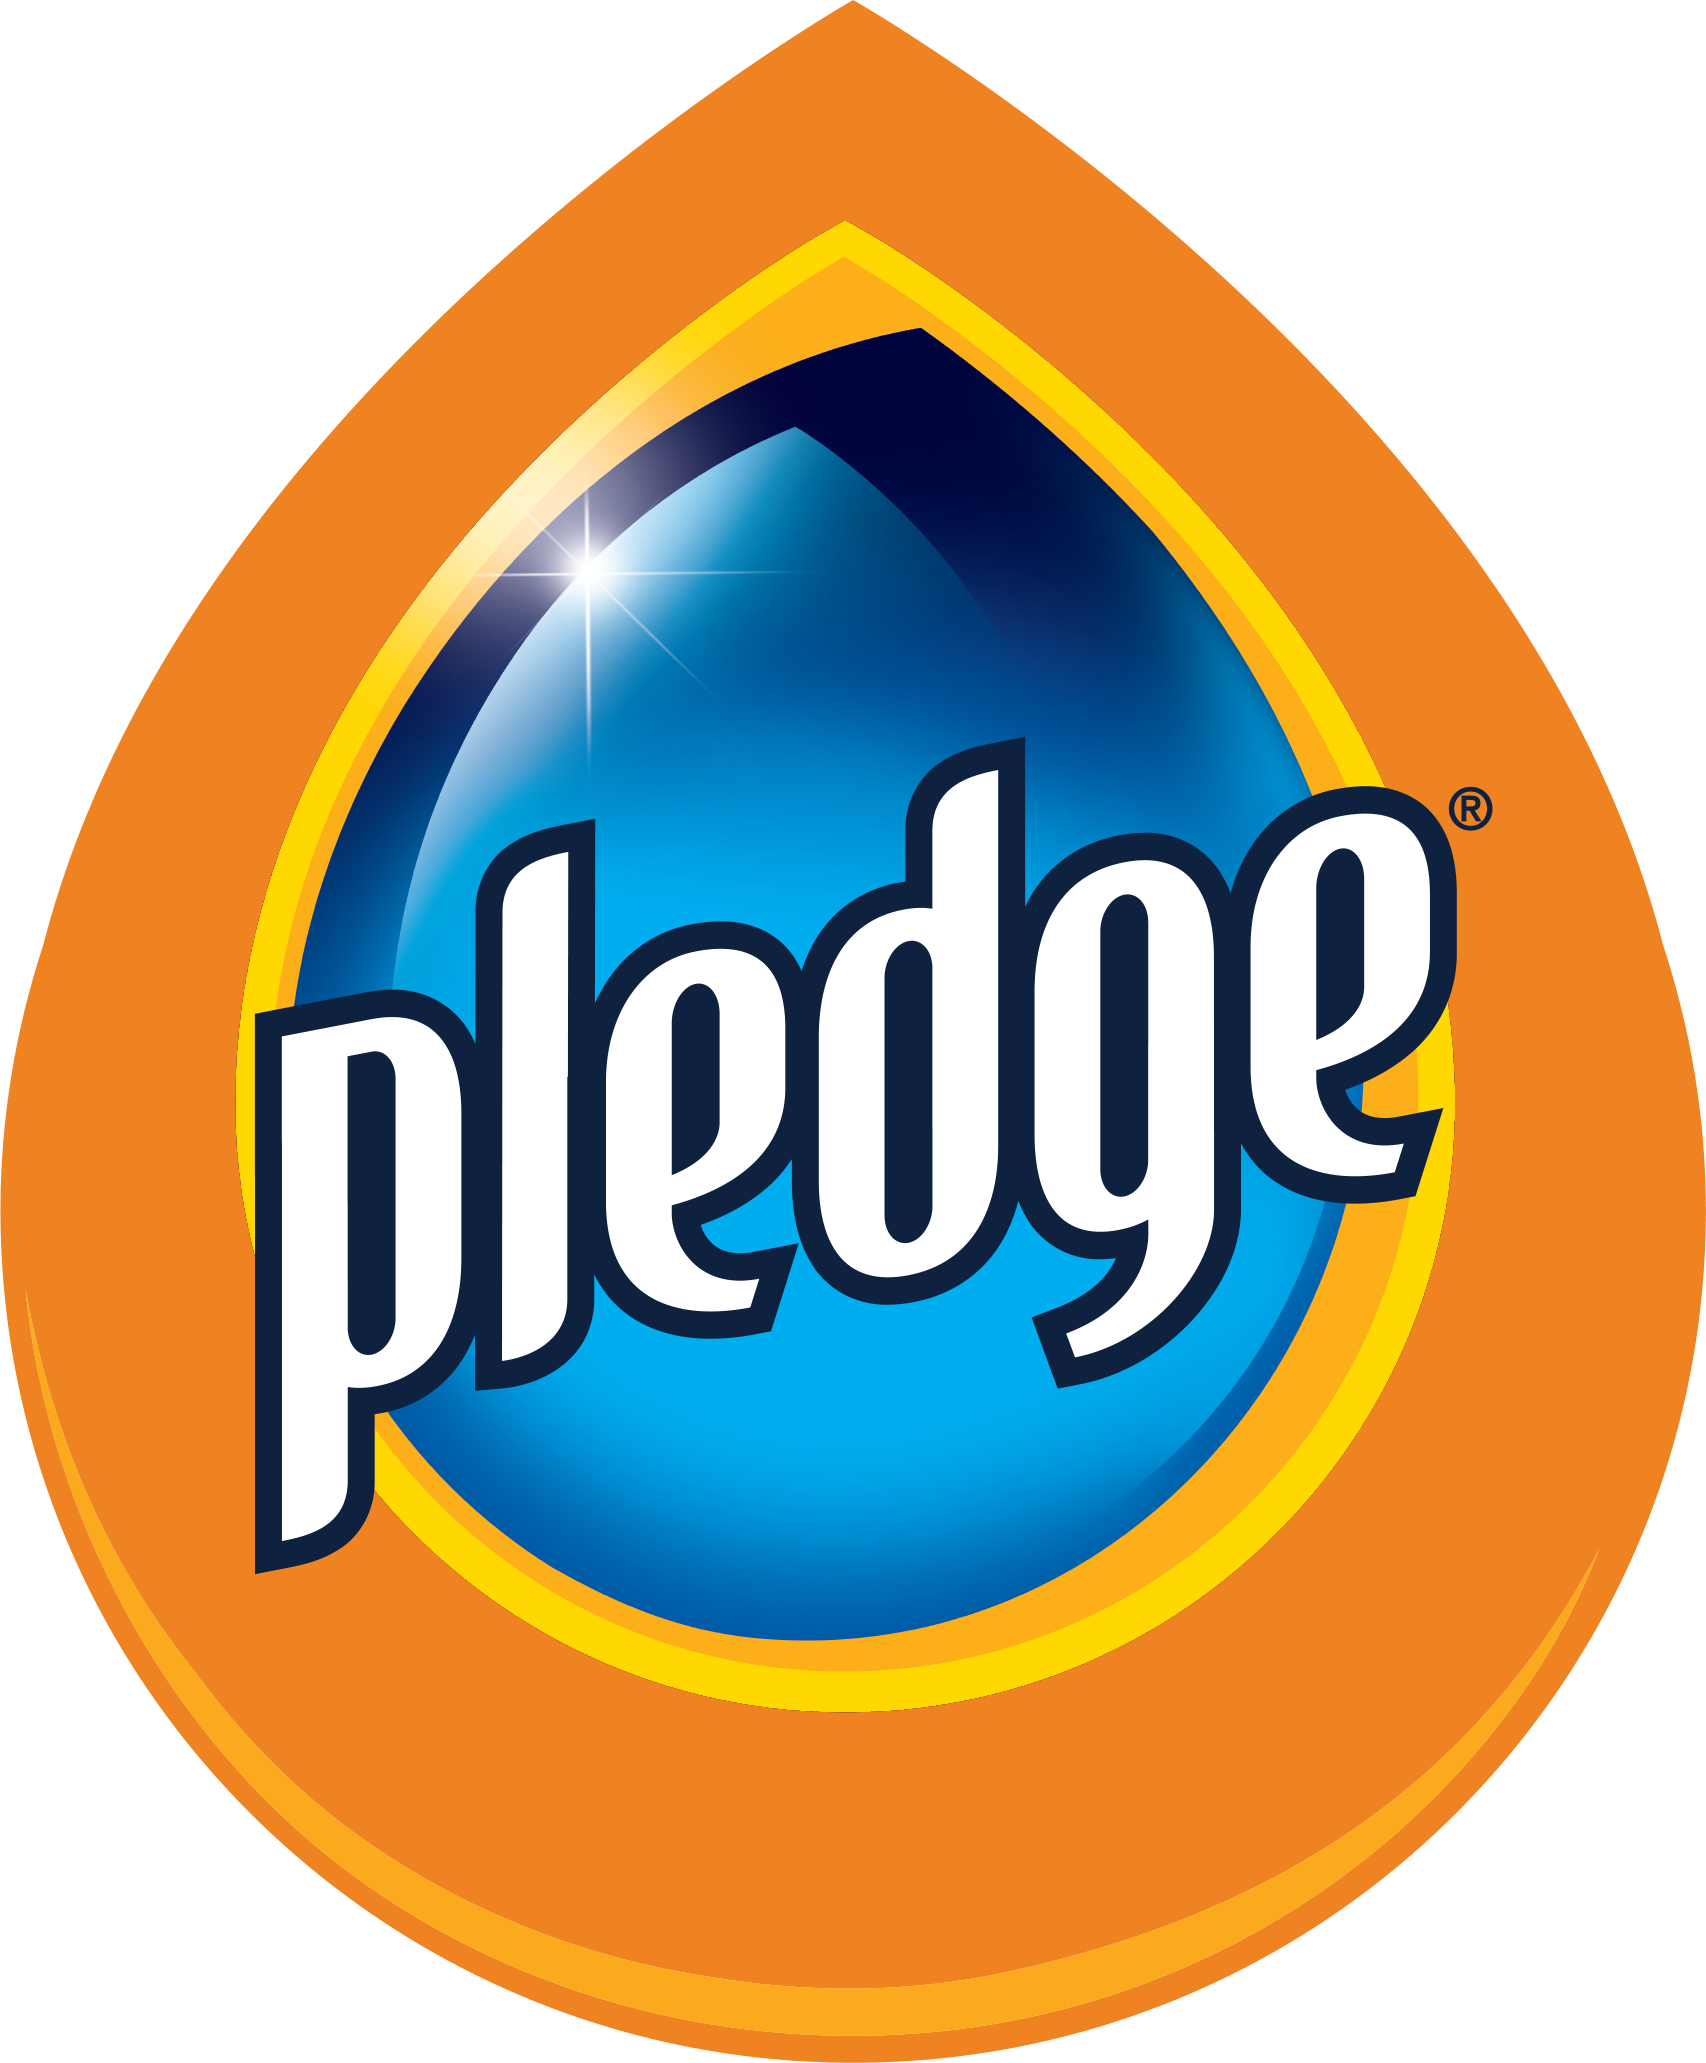 An orange Pledge logo.